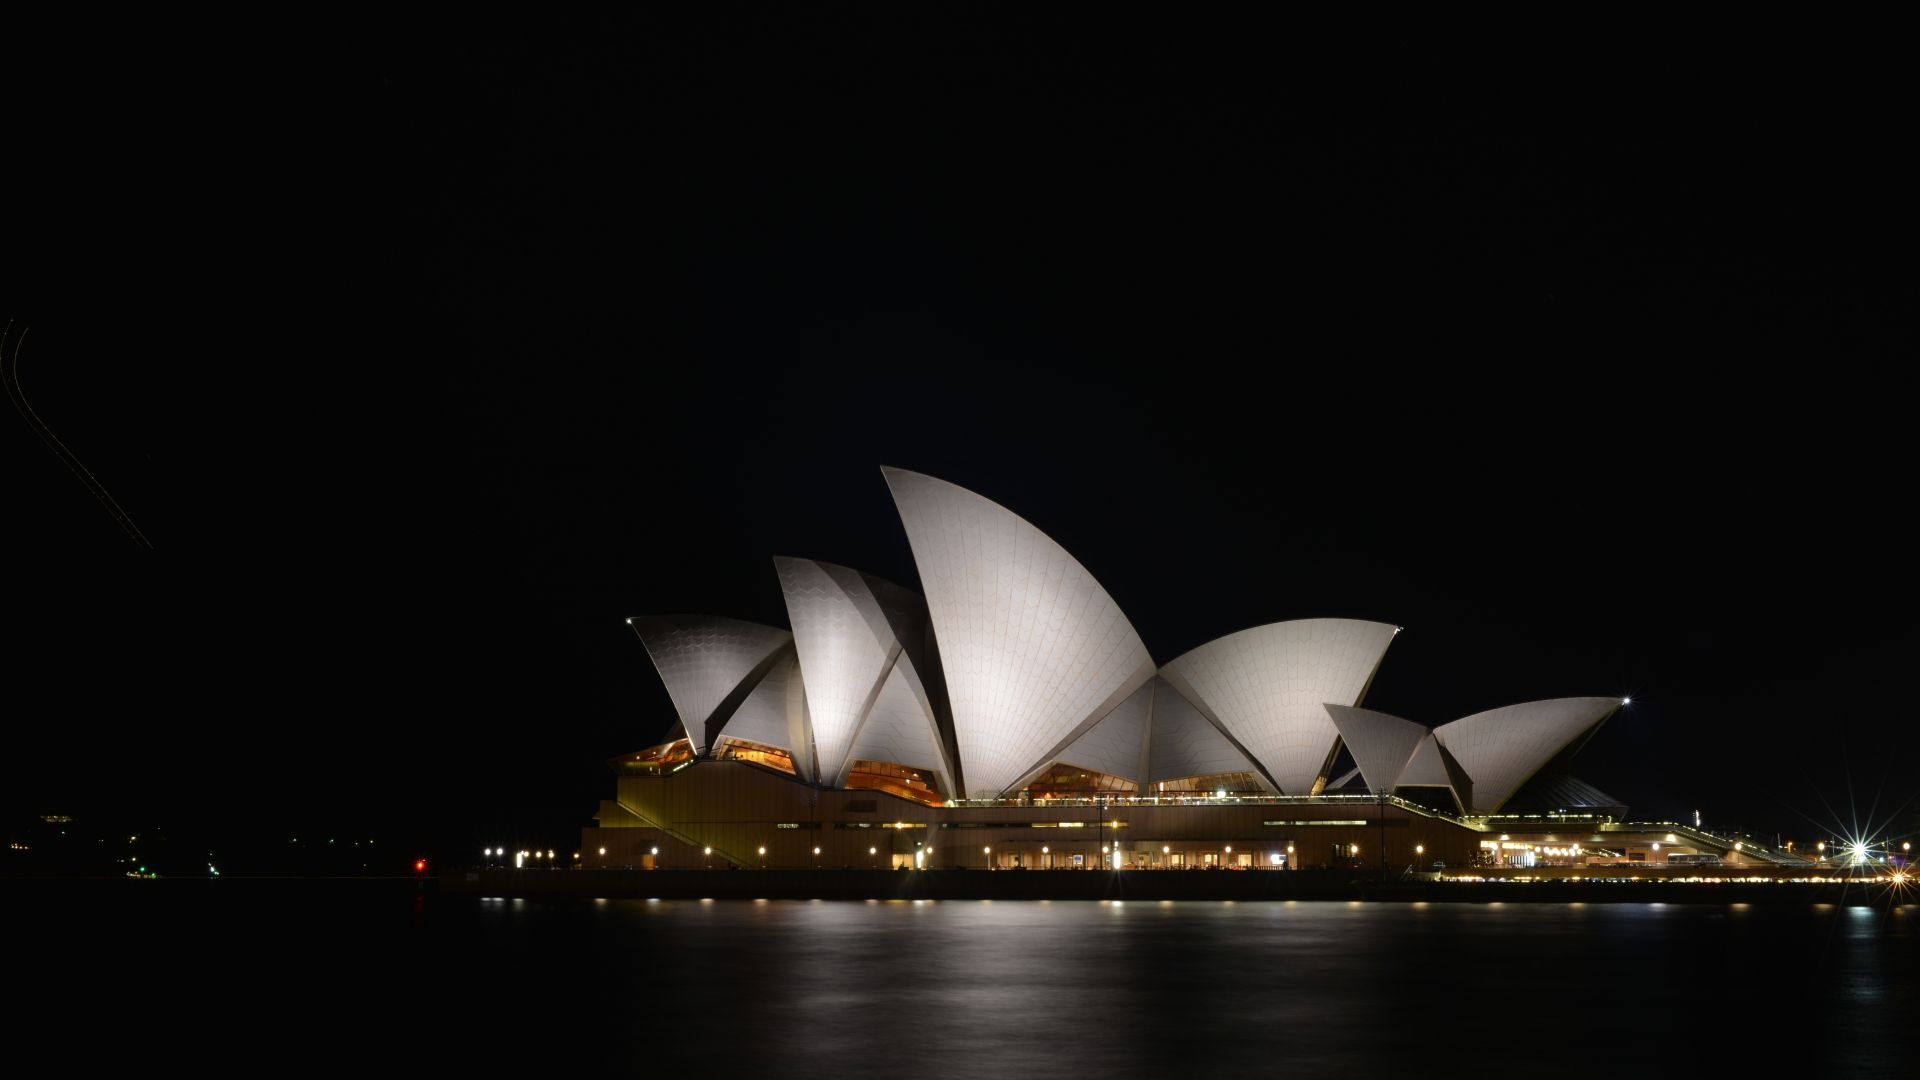 1920x1080 Desktop Wallpaper Sydney Opera House, Architecture, Night, Sydney, Hd Image, Picture, Background, 08c235